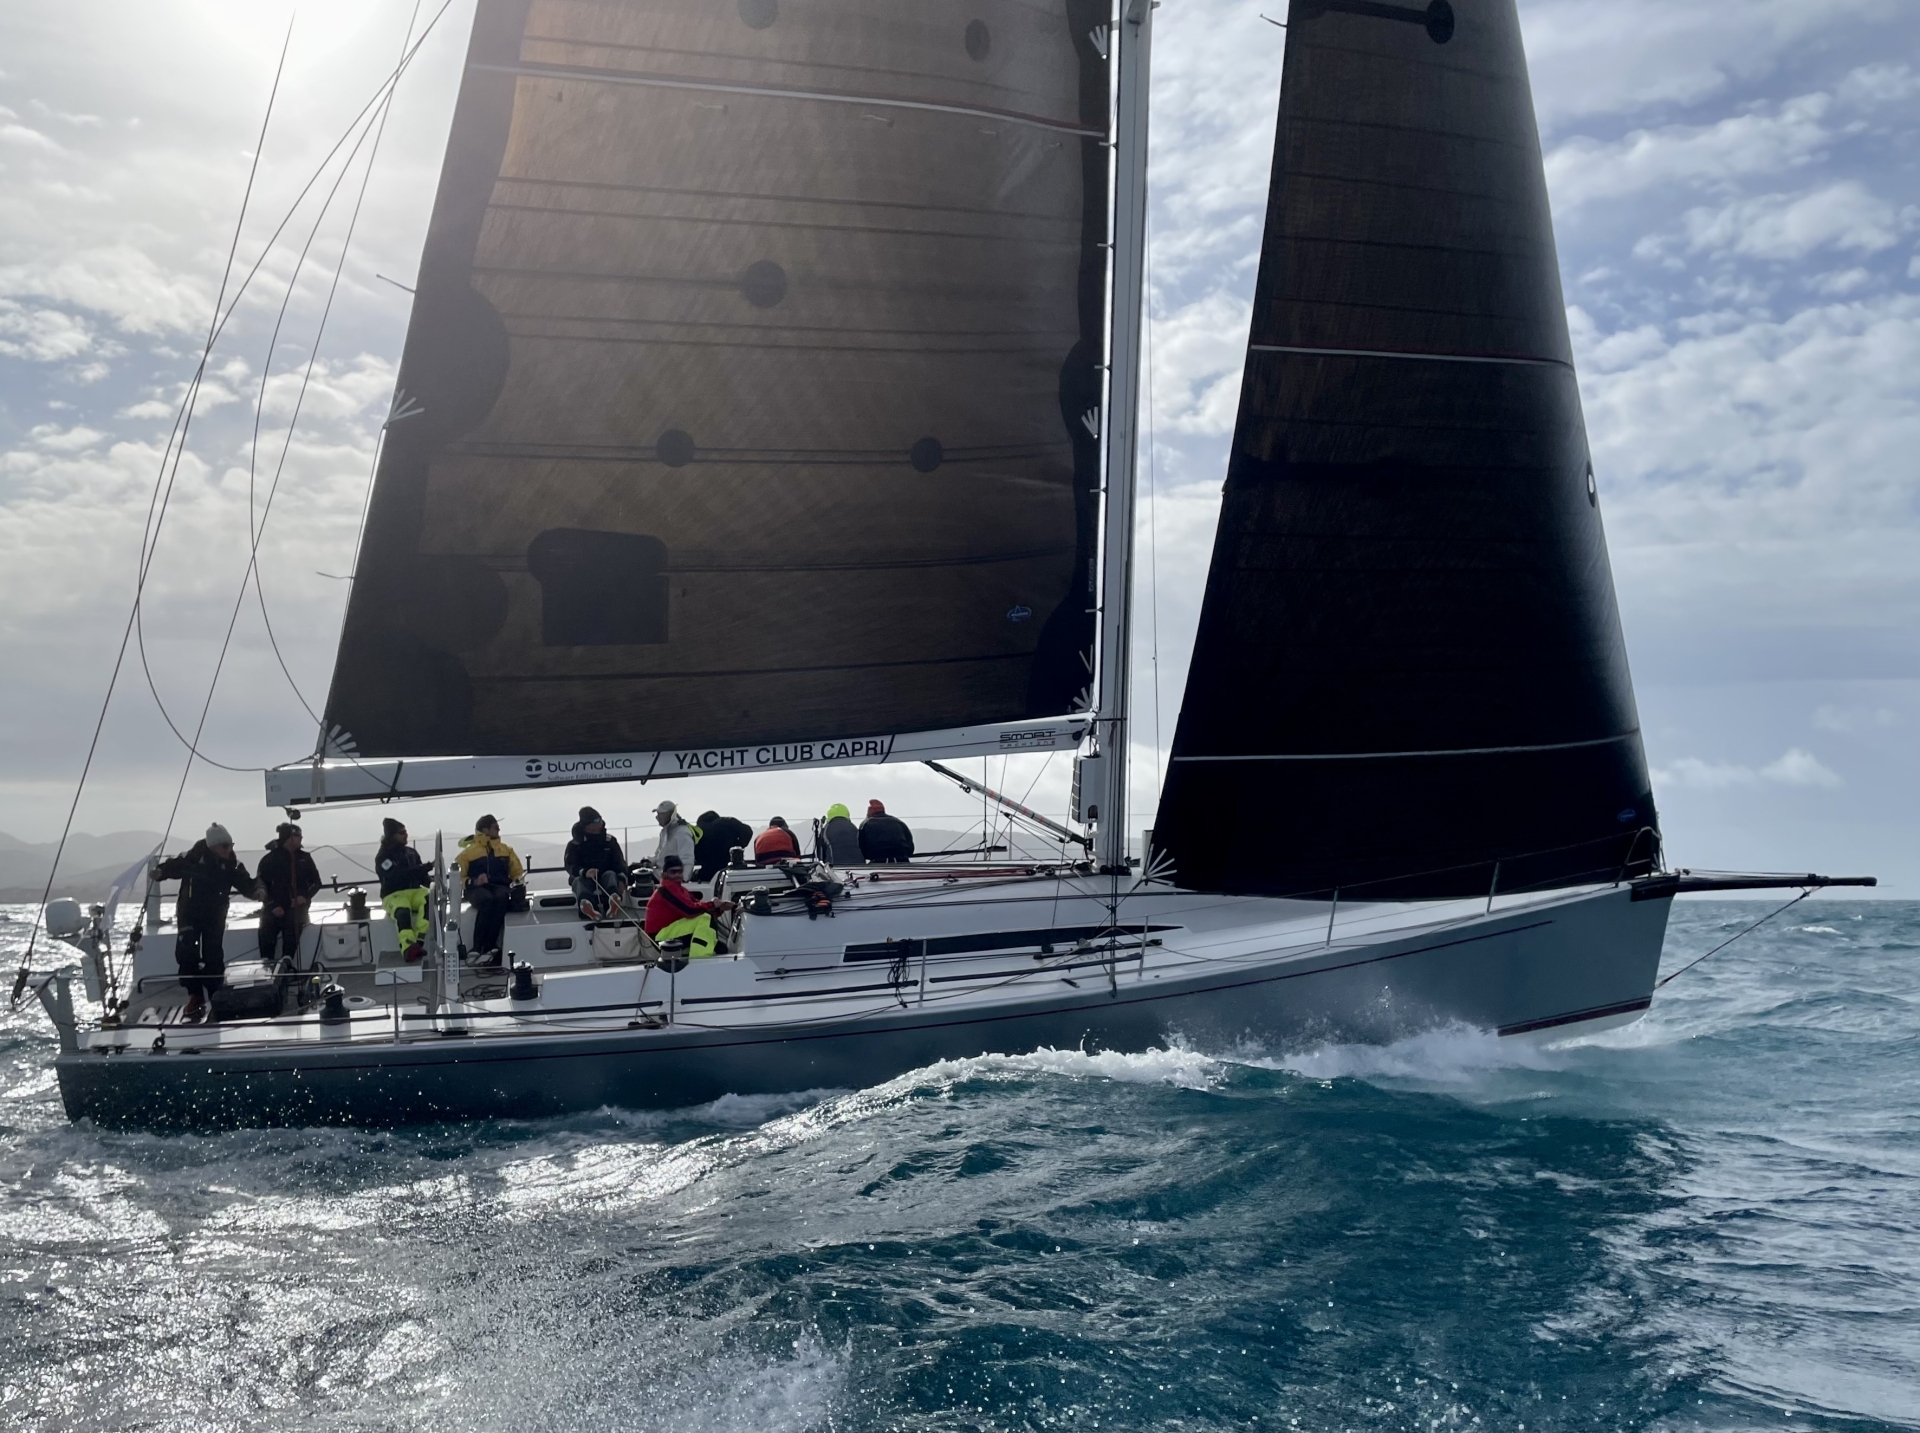 RAN 630: TestaCuore Race vincitore assoluto, Ultravox primo Double Handed - News - Yacht Club Costa Smeralda